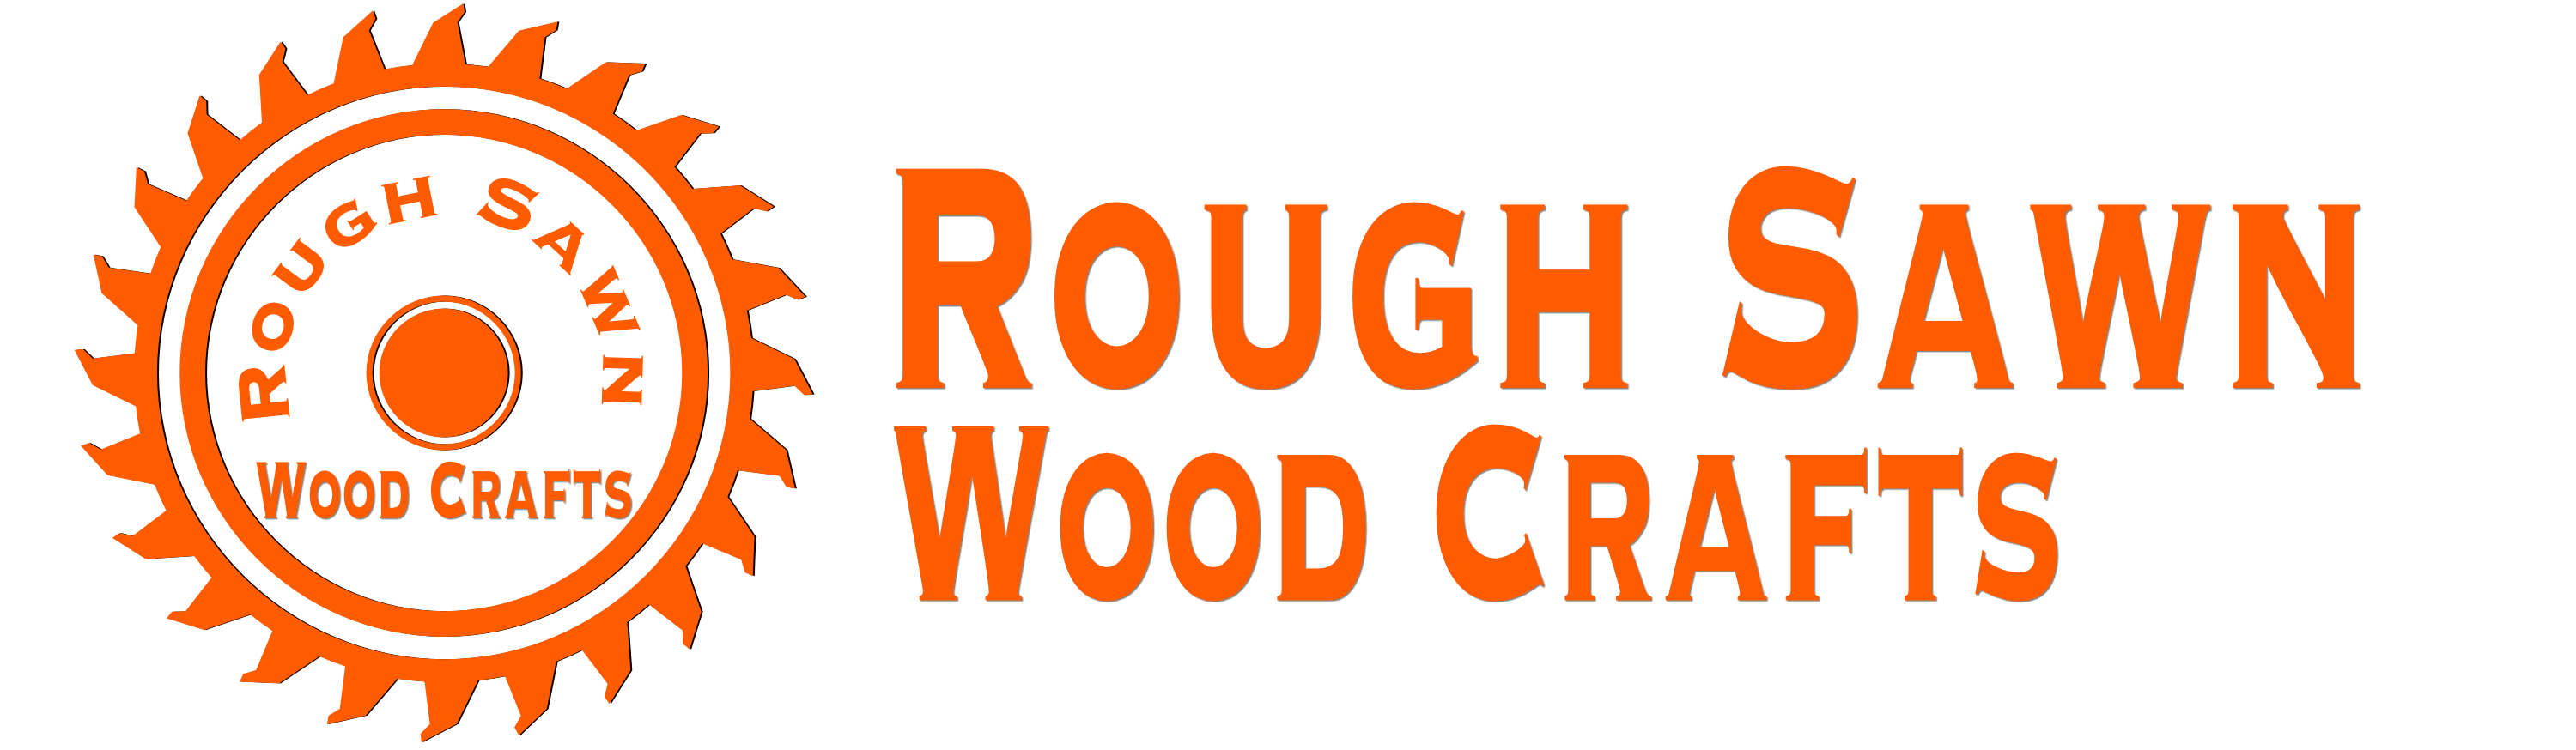 Rough Sawn Wood Crafts